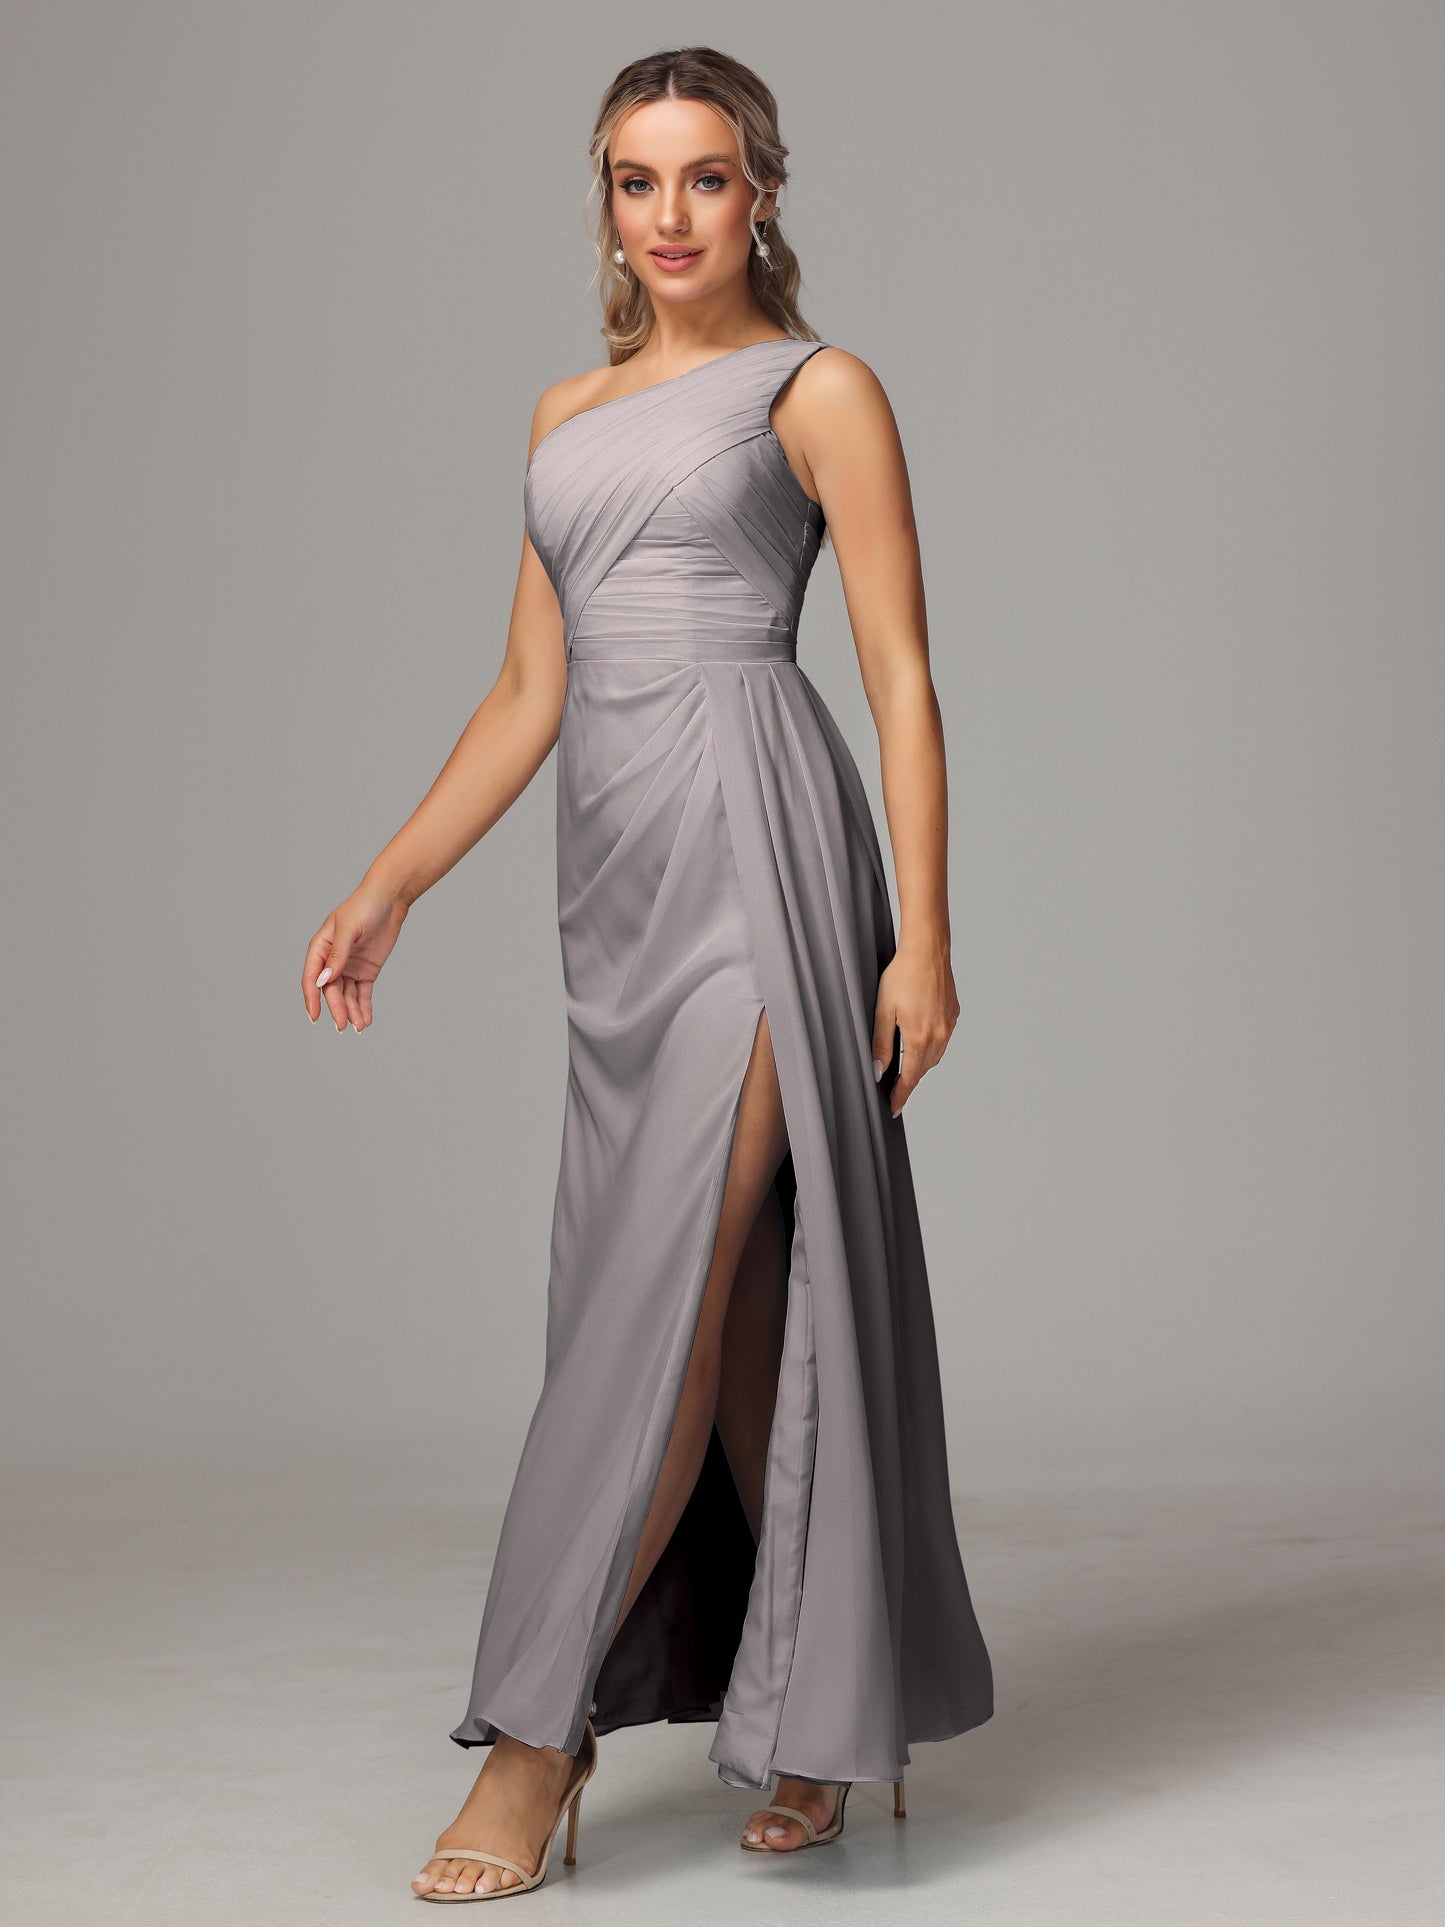 One Shoulder Floor Length Chiffon Bridesmaid Dress